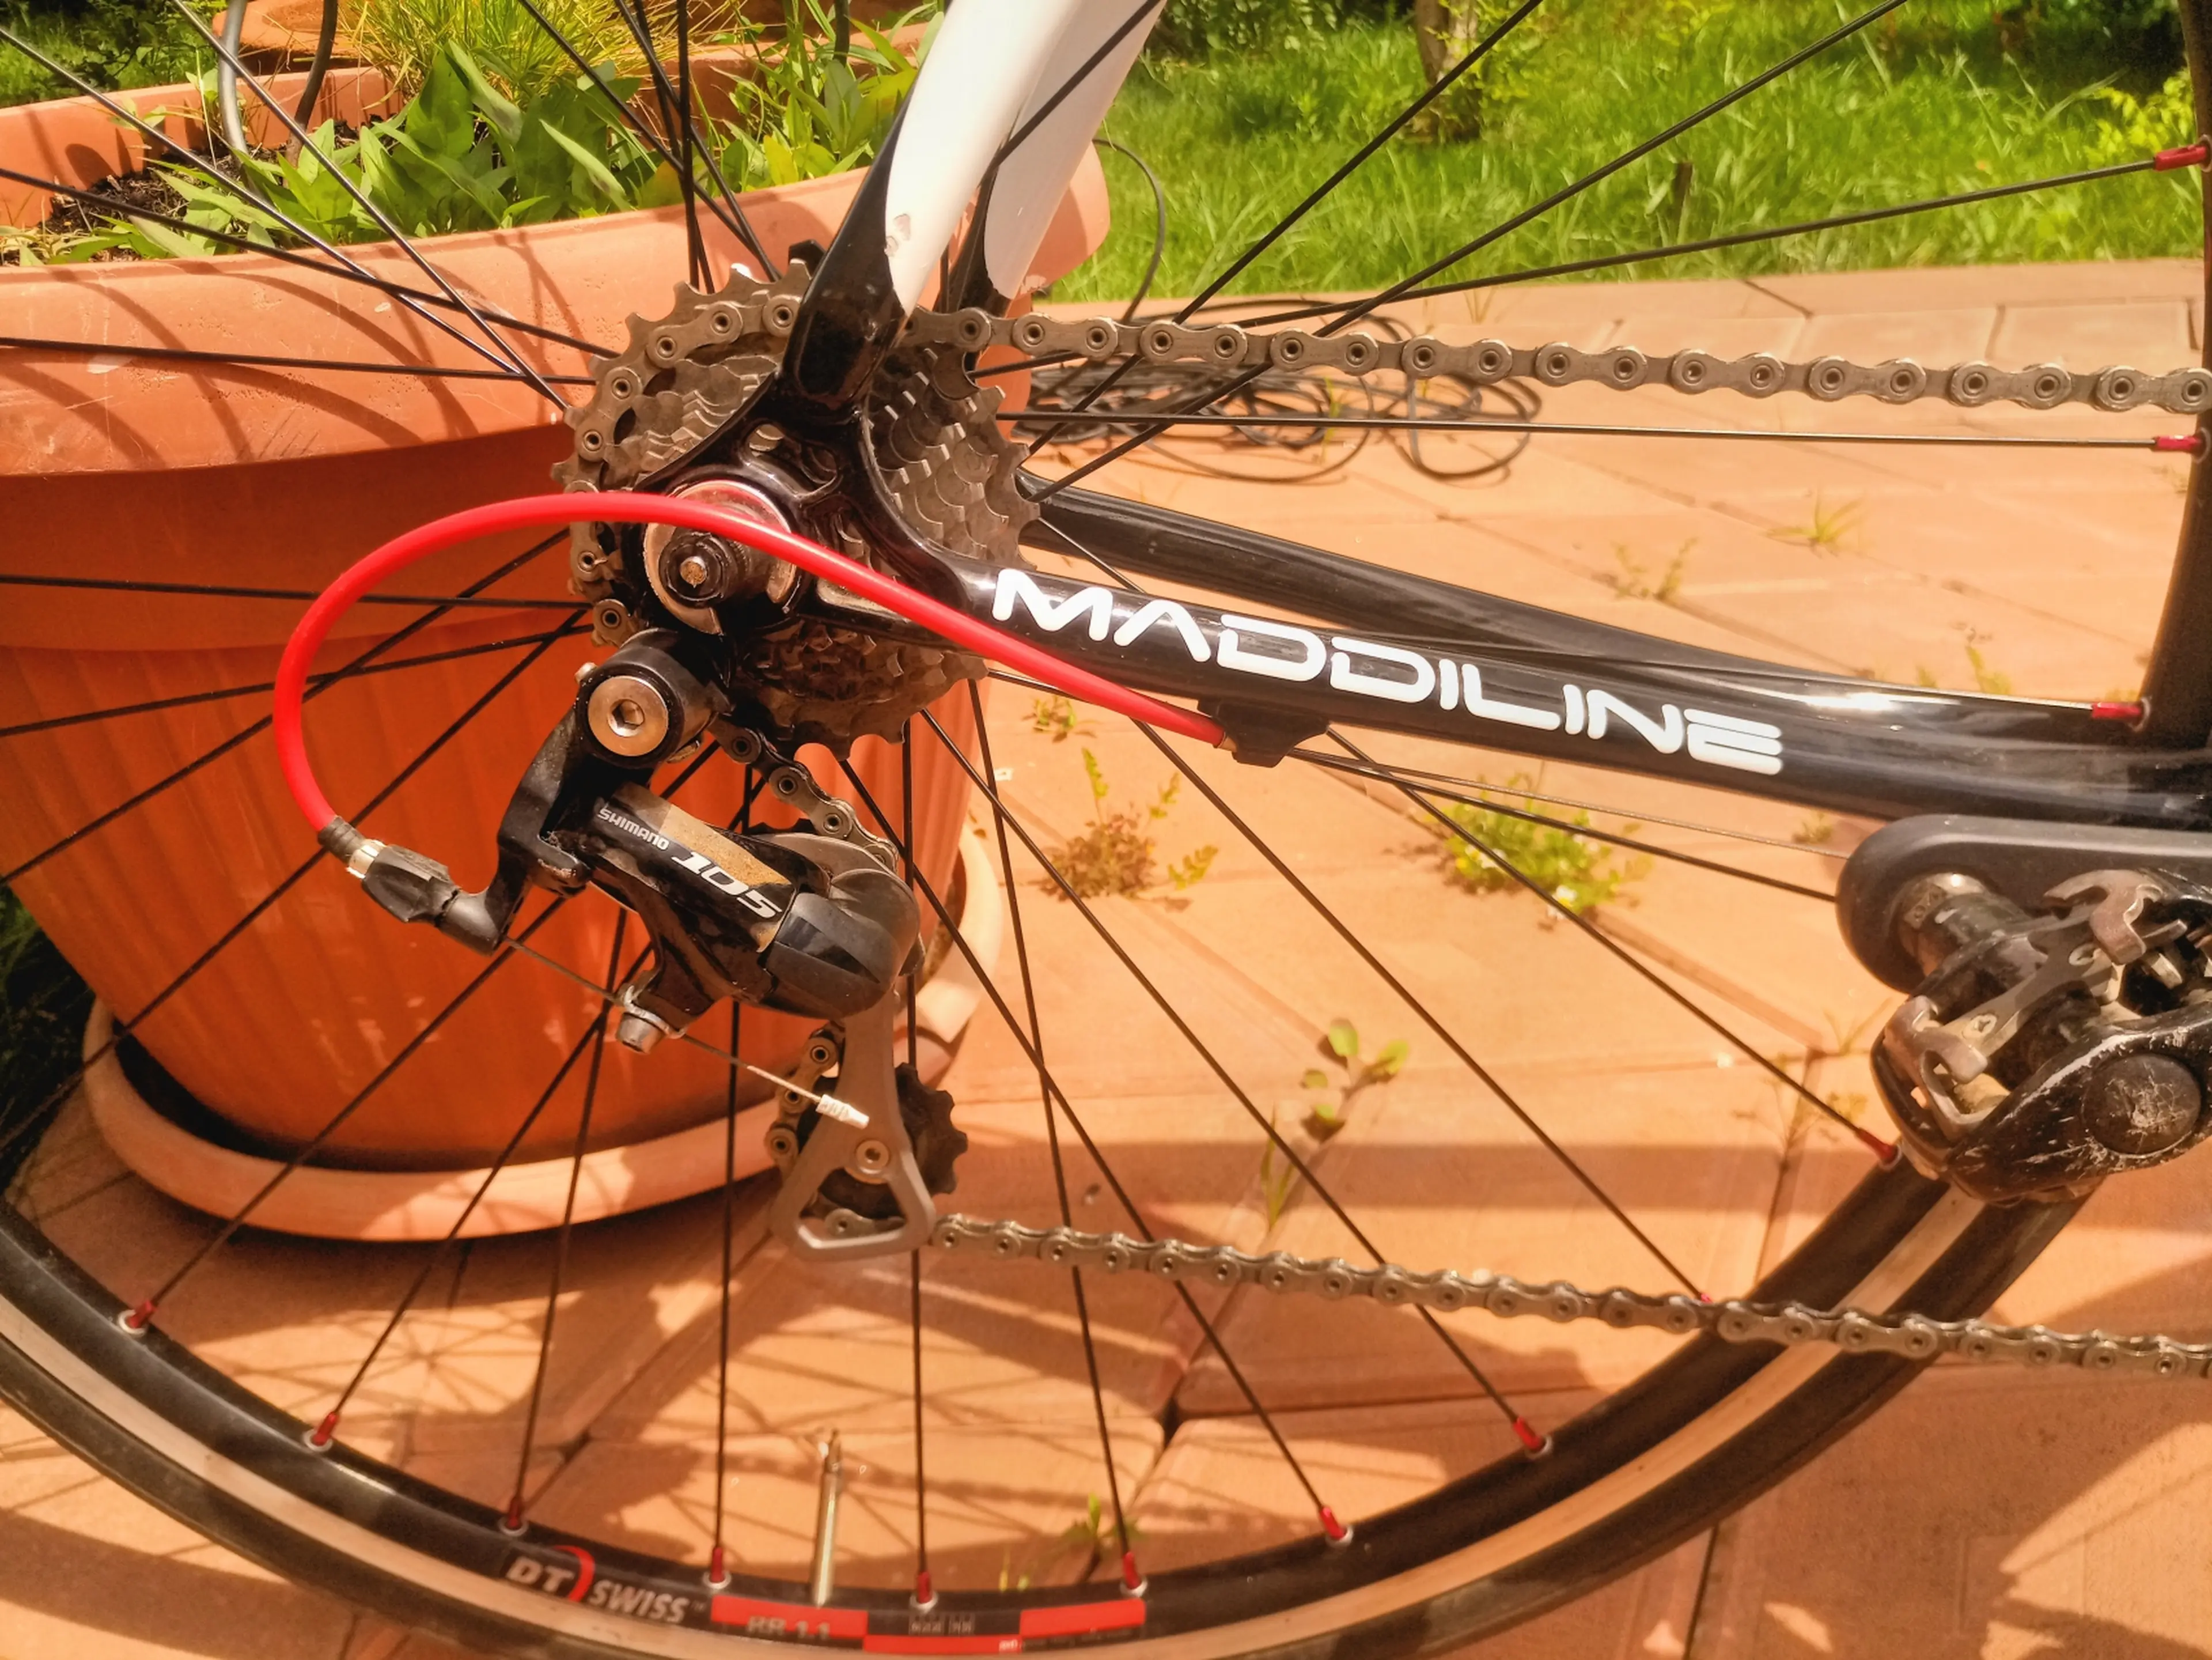 4. Vand Bicicleta Cursiera Full Carbon Unicat Maddiline Integro an 2018